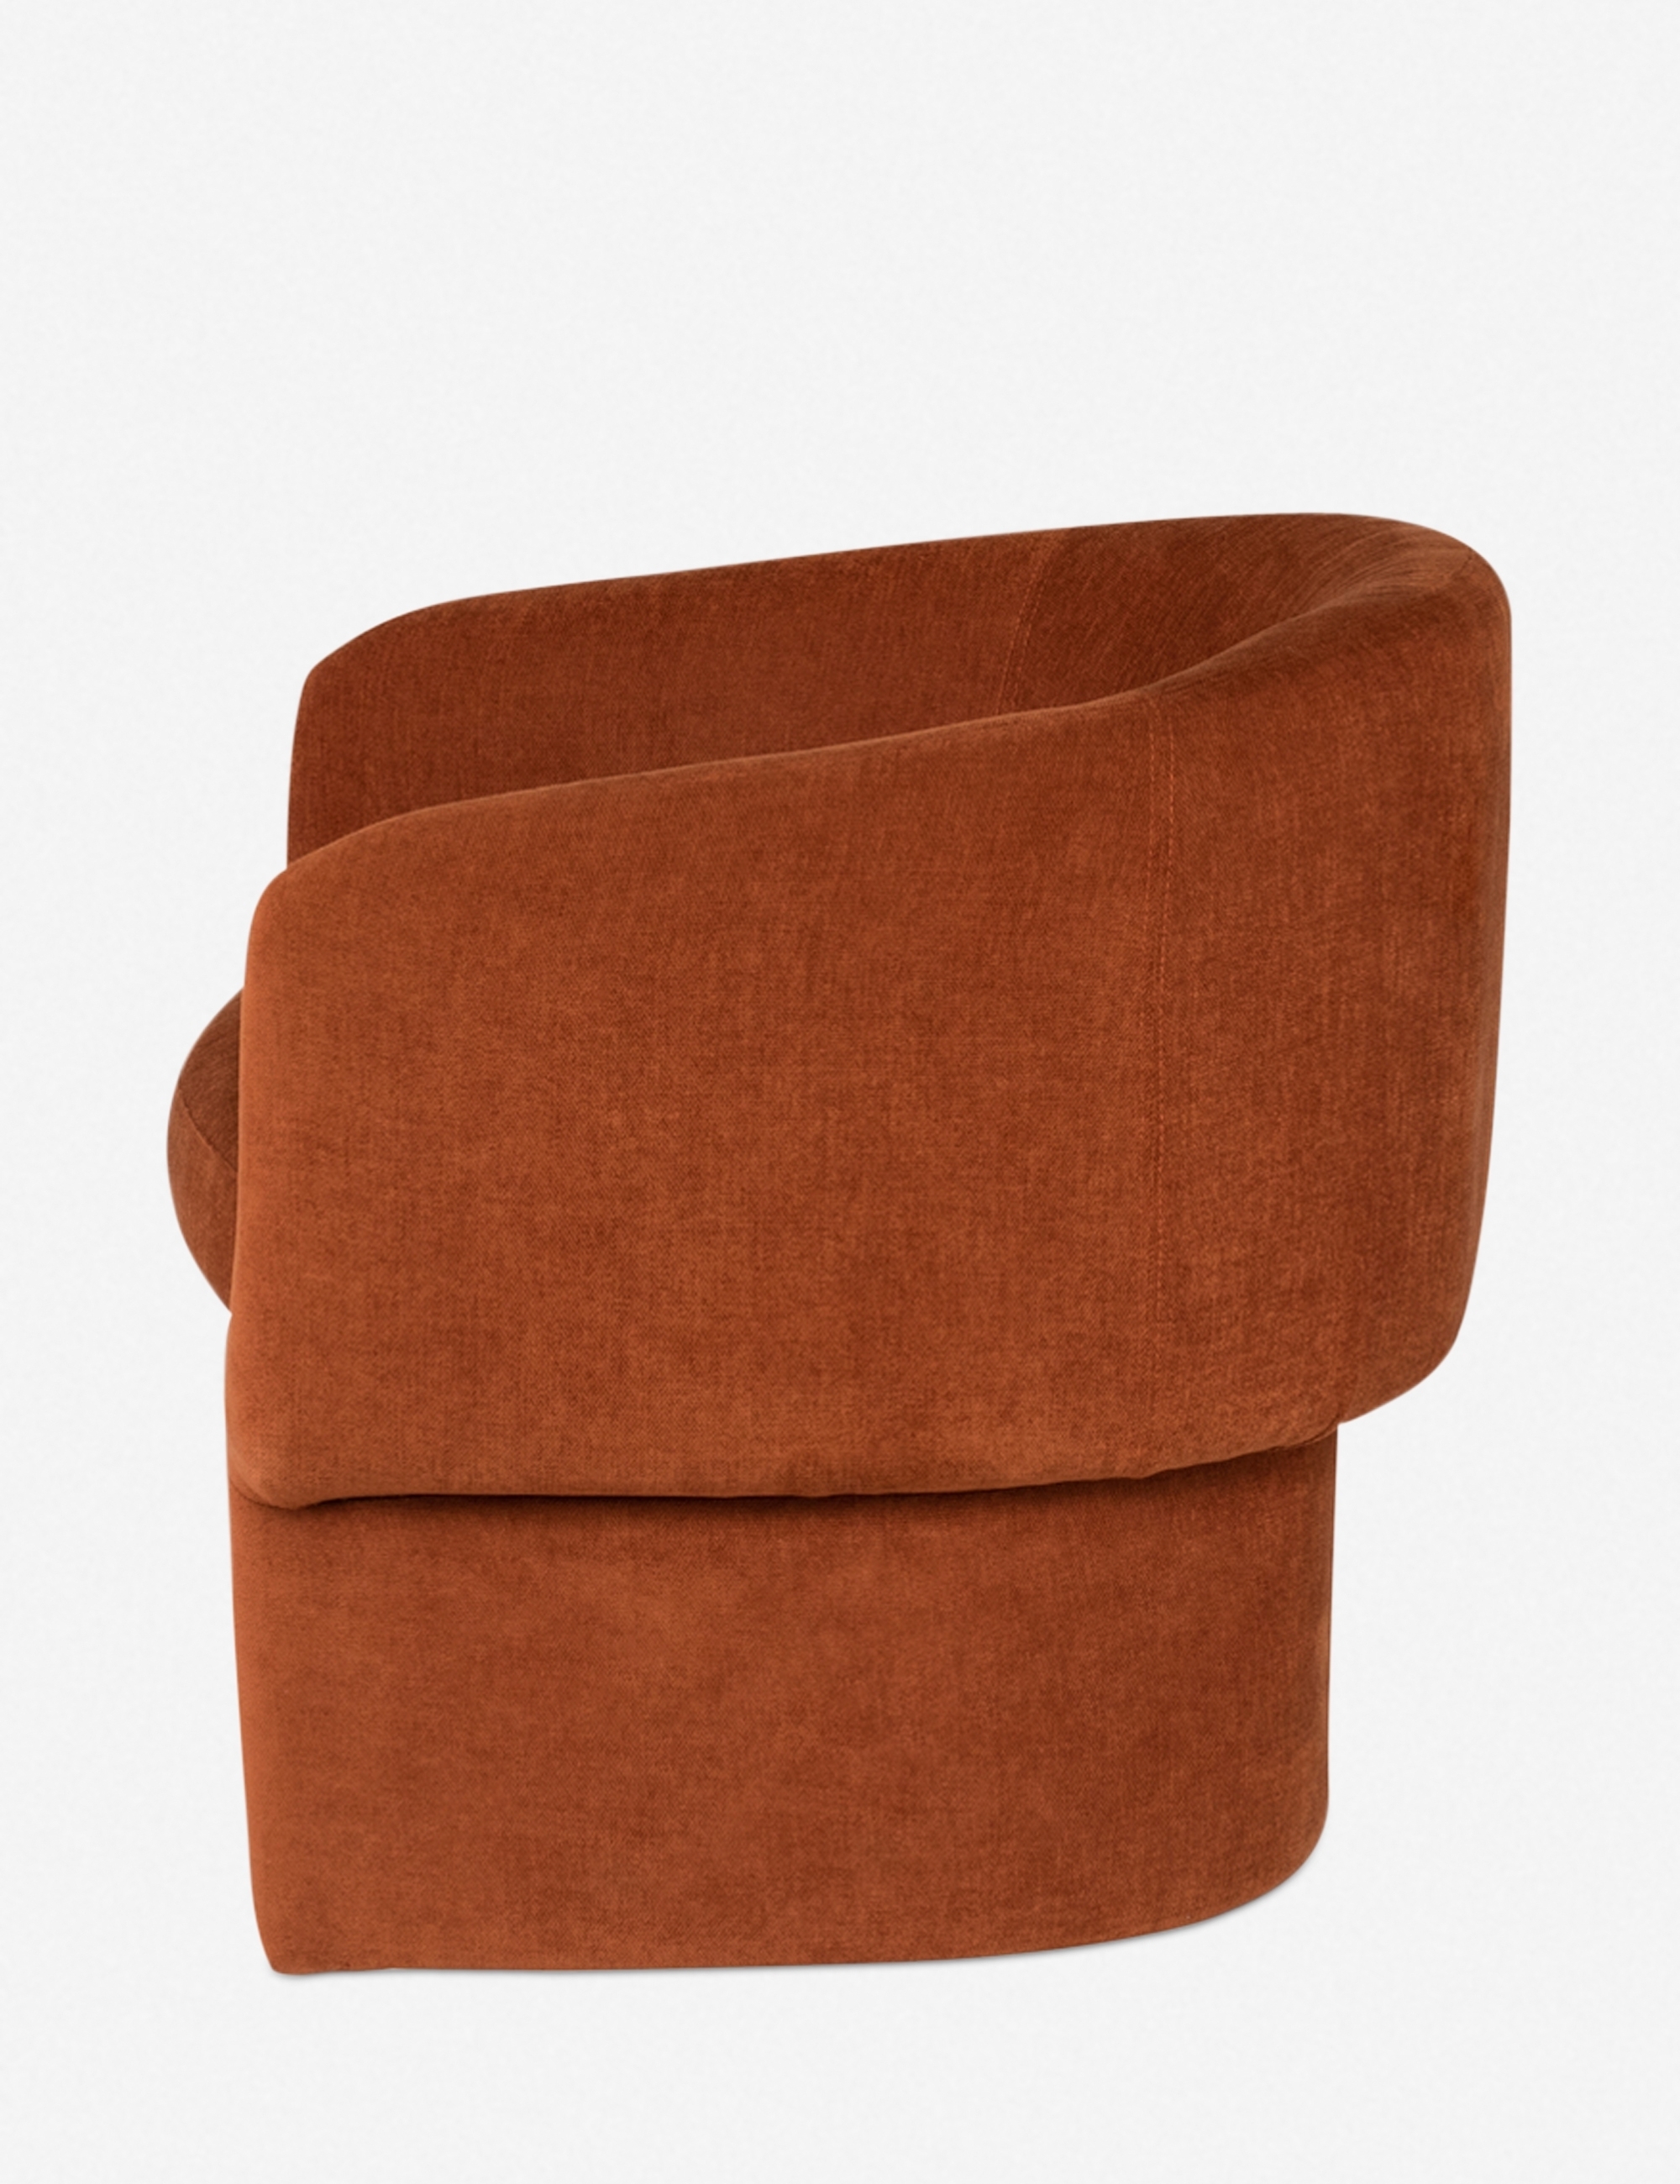 Pomona Occasional Chair, Terracotta - Image 3